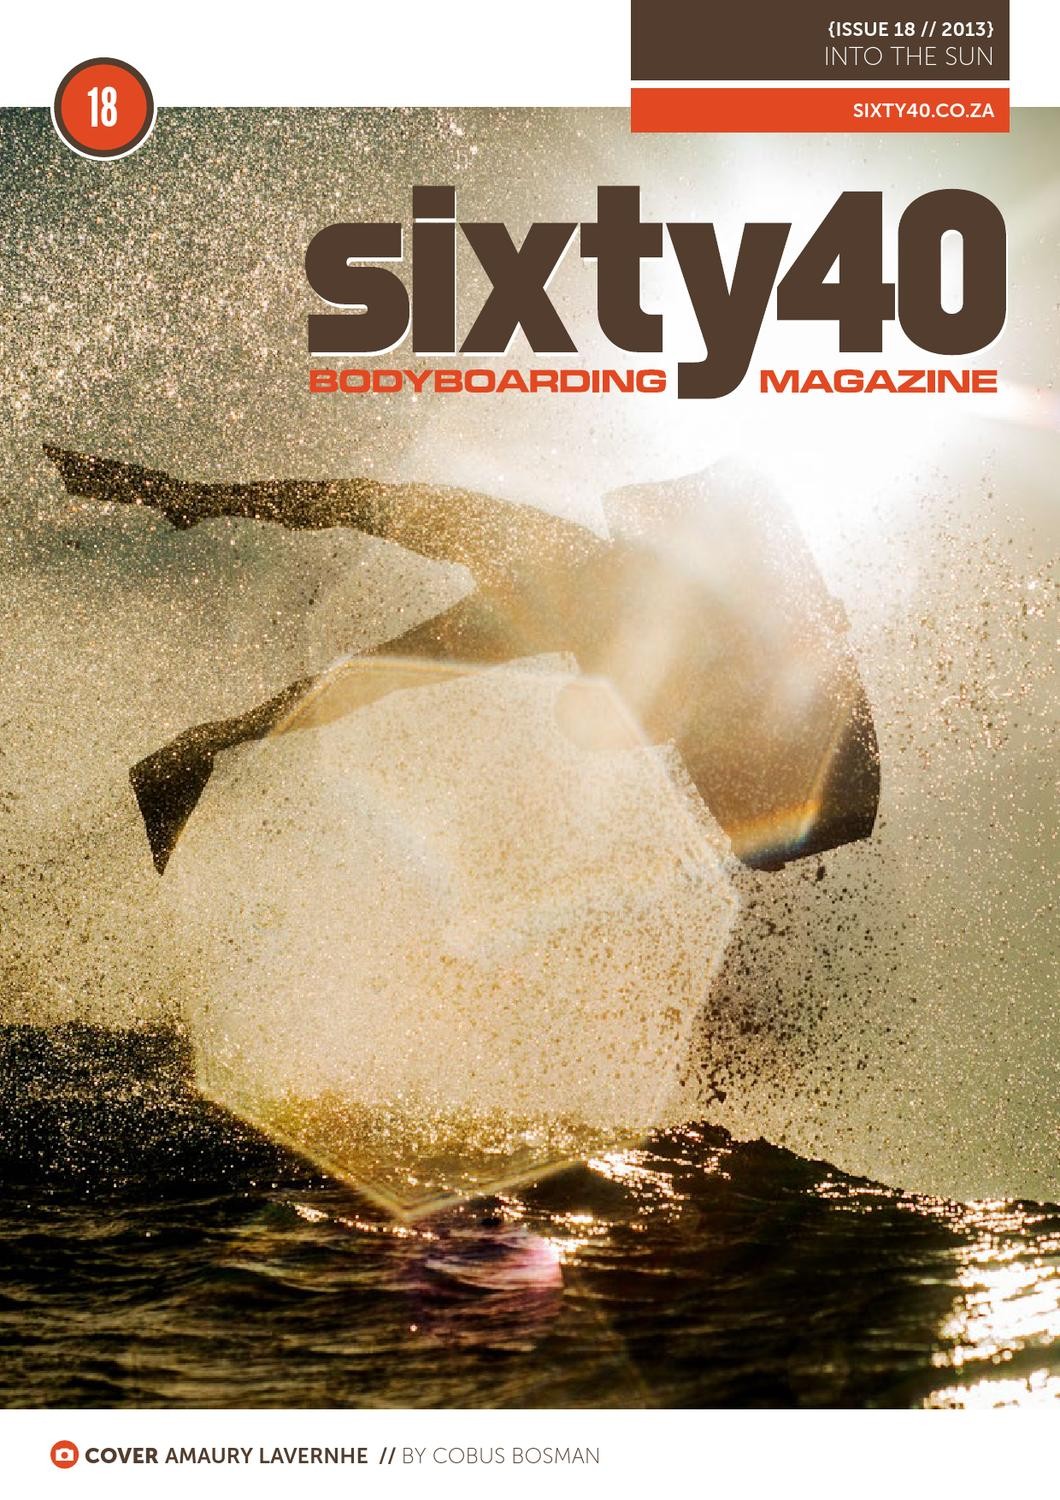 Sixty40 Bodyboarding Magazine - issue #18 - page 1